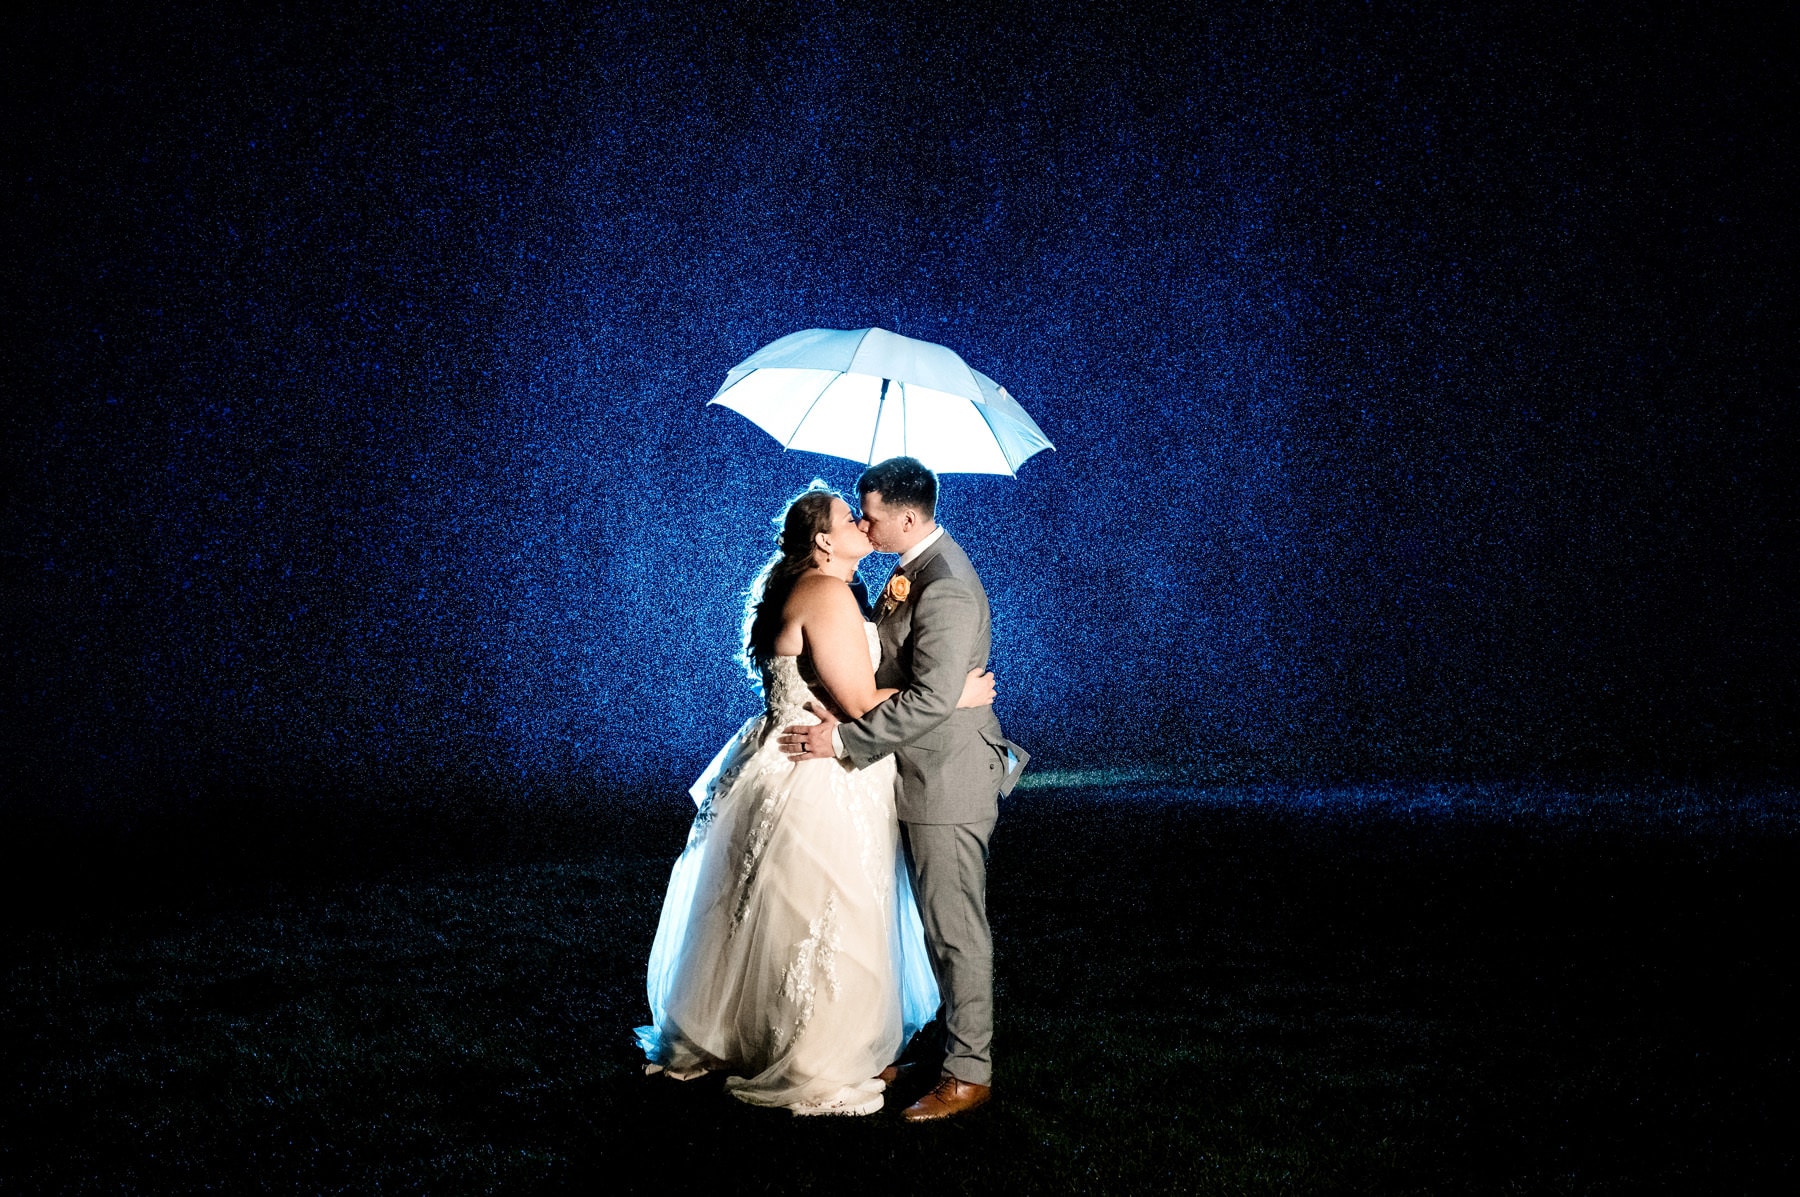 rainy night time wedding portrait at Sandy Hook Chapel